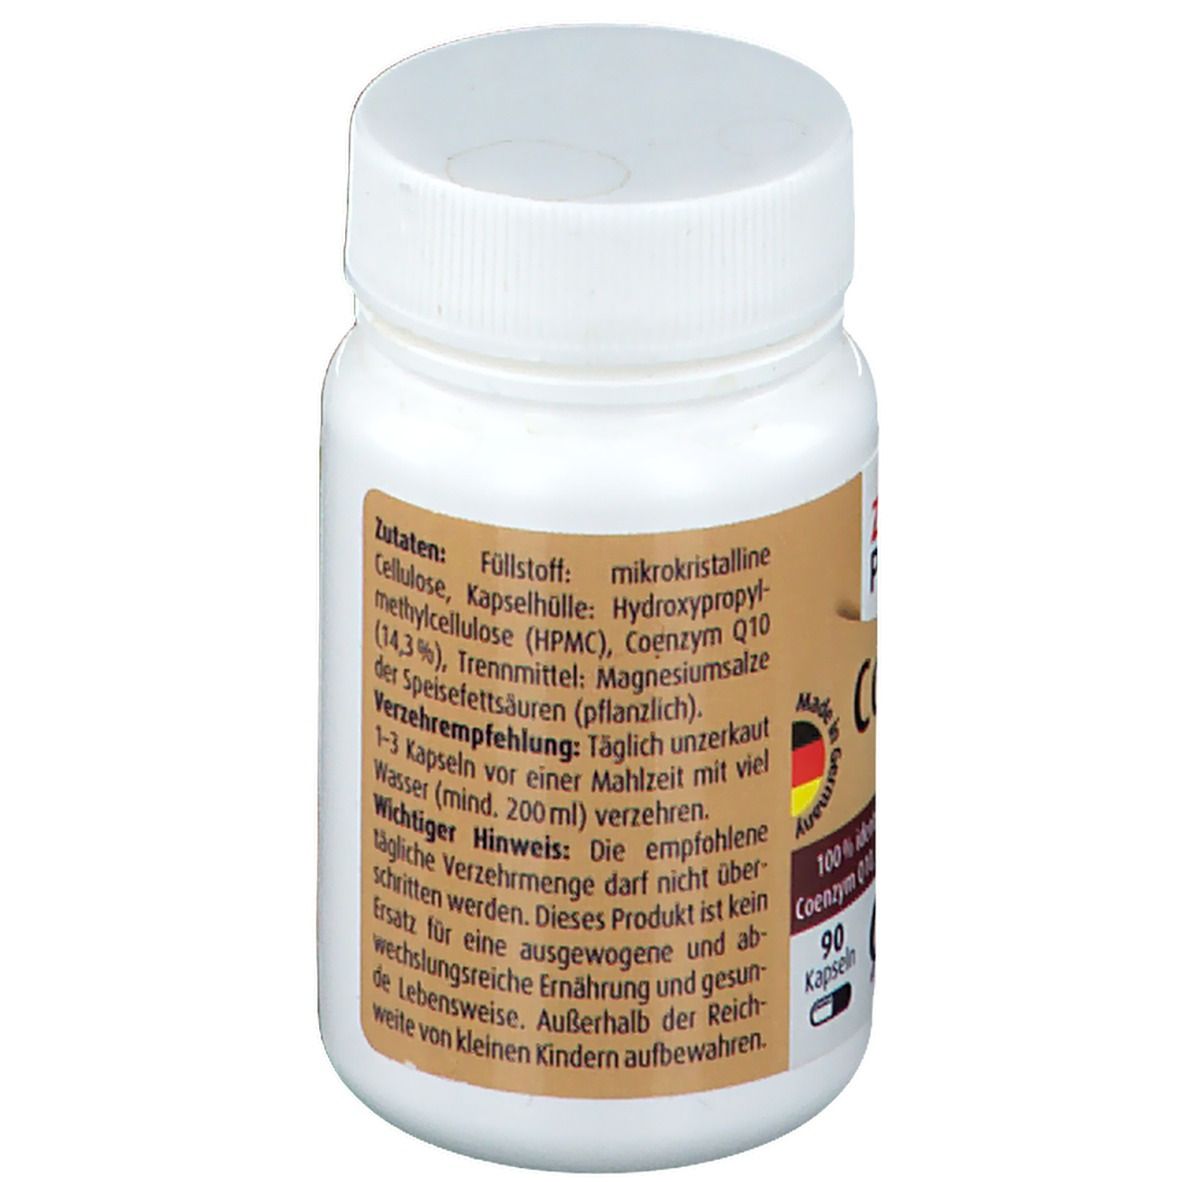 ZeinPharma® Coenzym Q10 Kapseln 30 mg